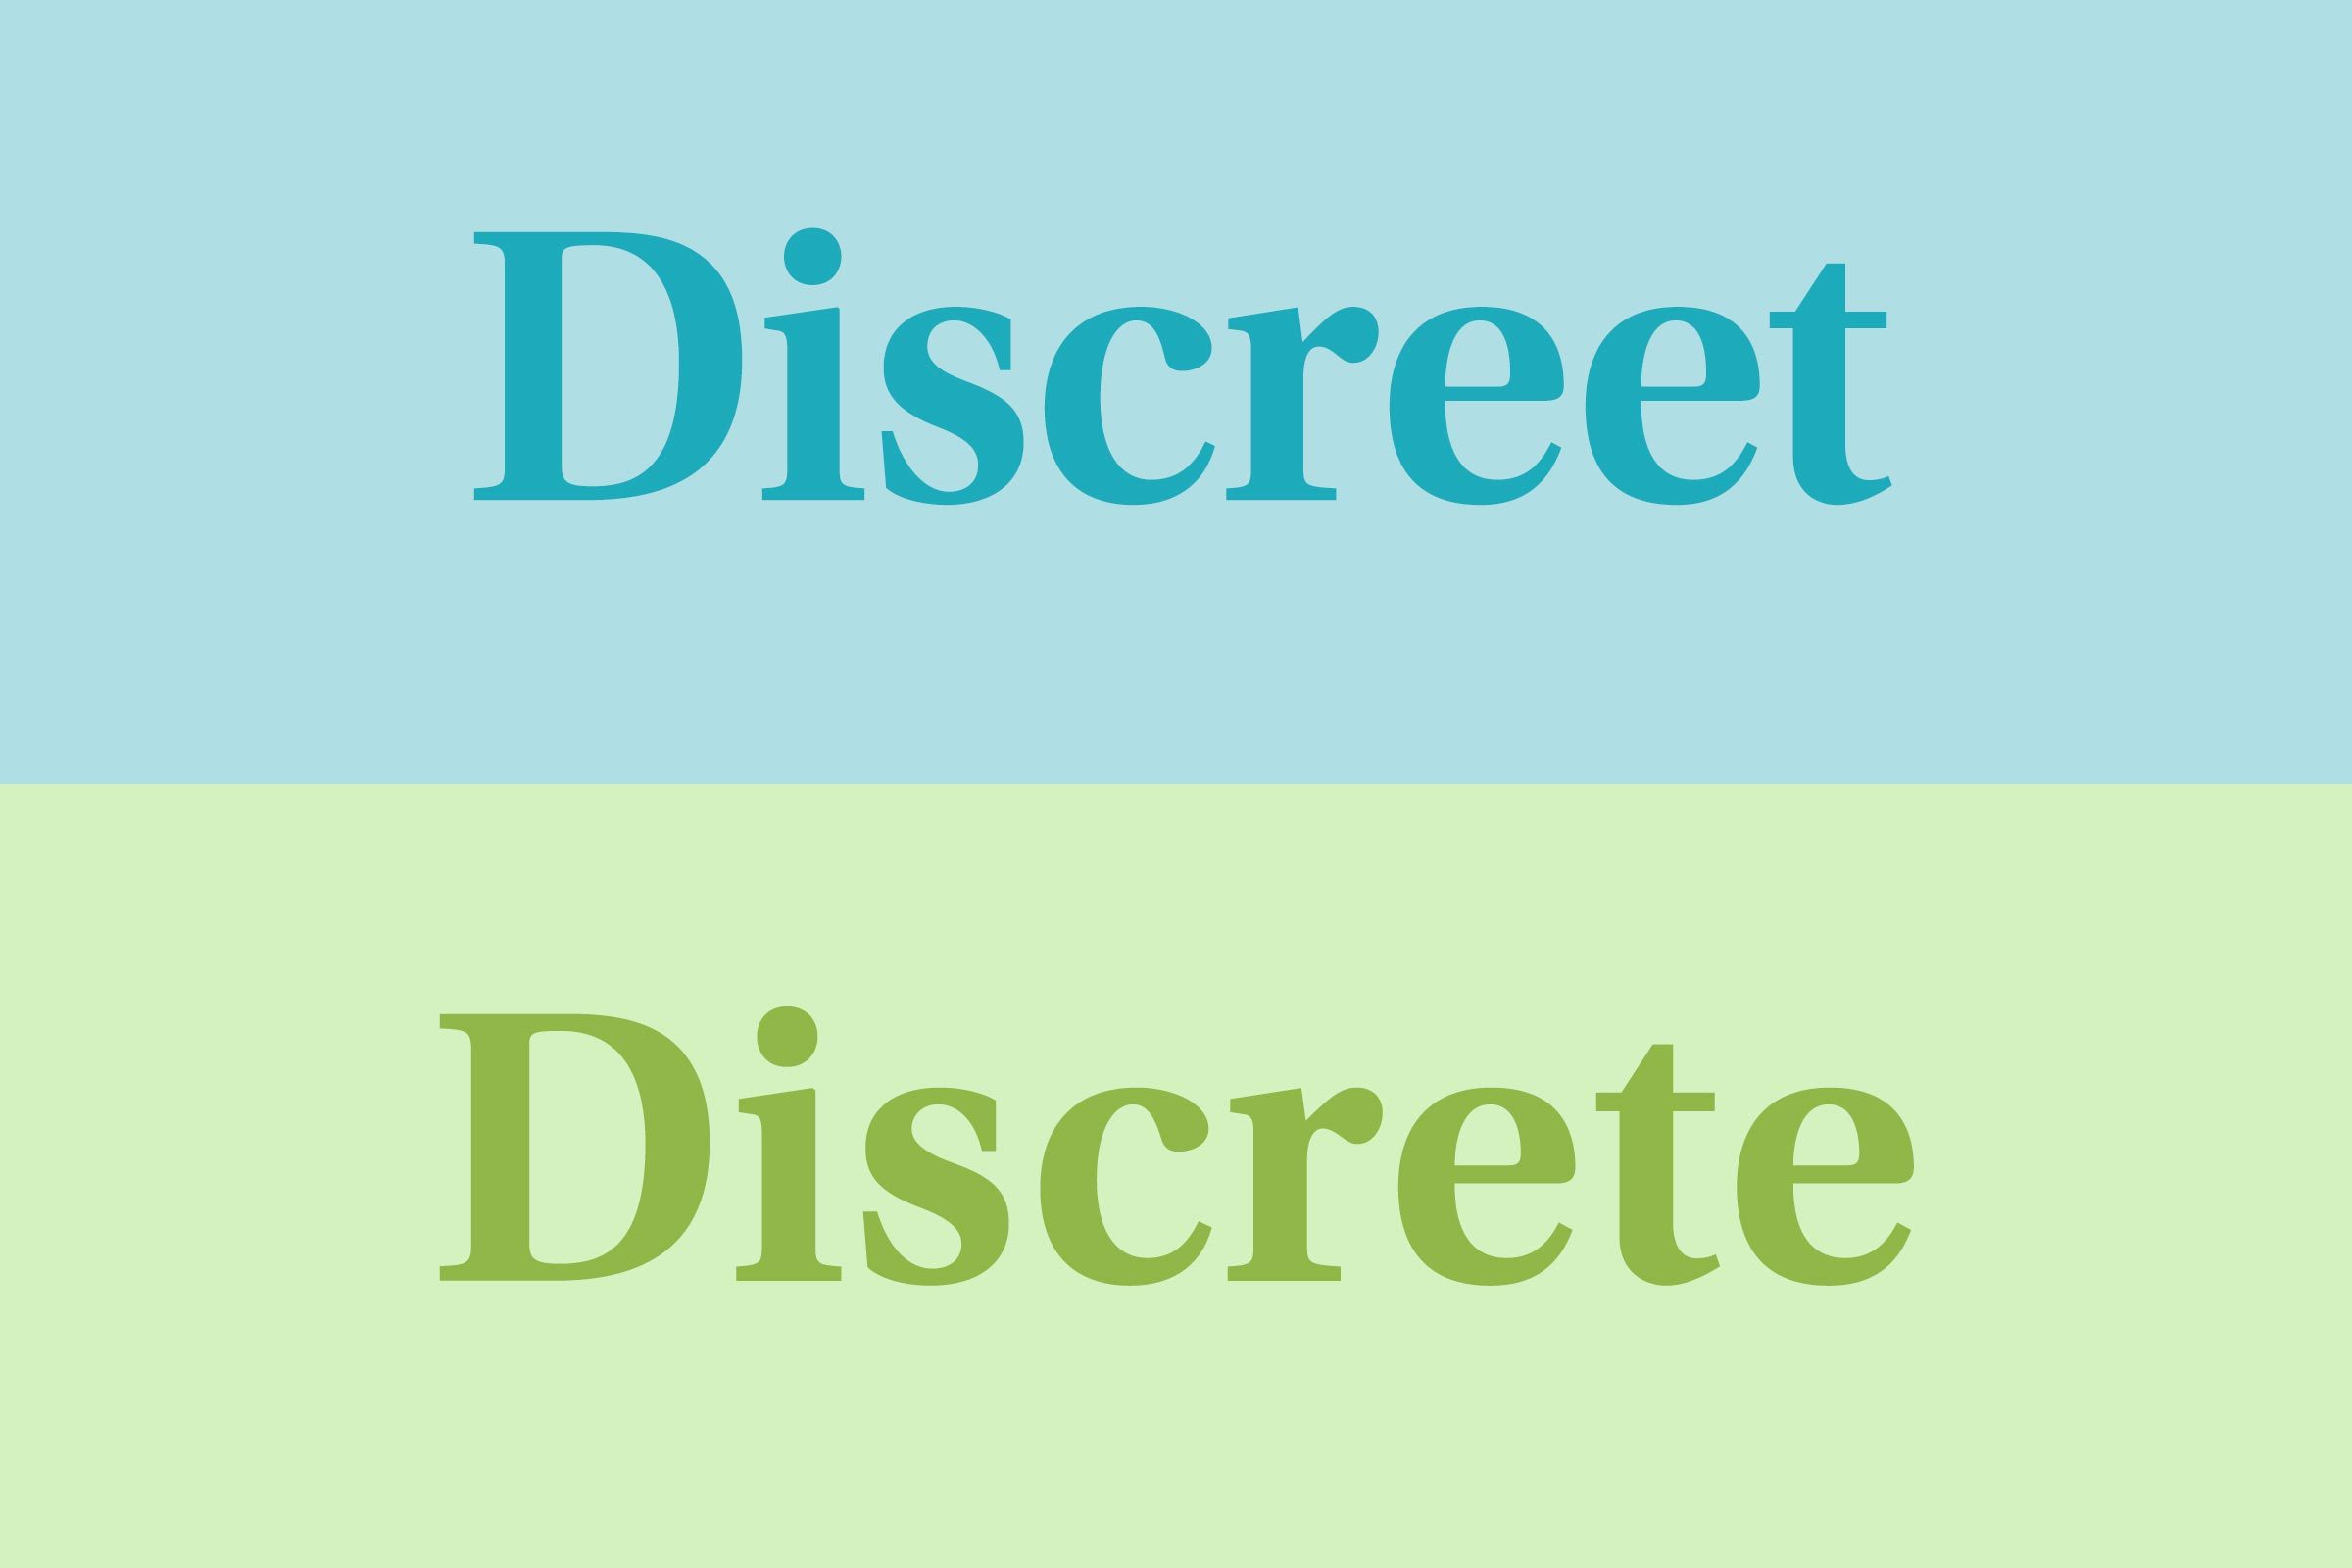 Discreet vs. discrete